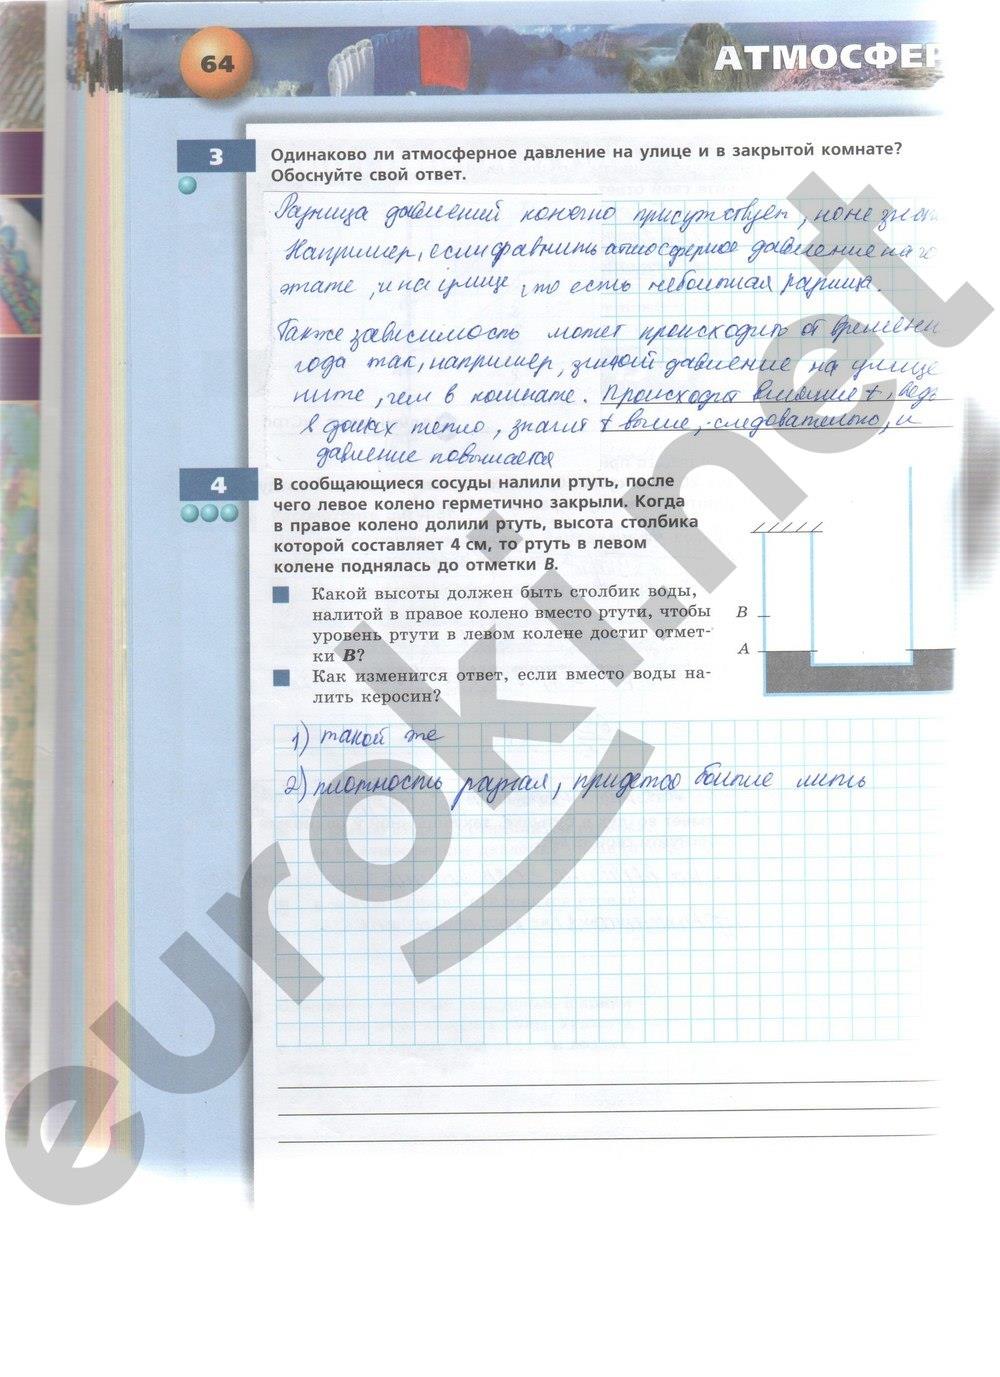 гдз 7 класс тетрадь-тренажер страница 64 физика Артеменков, Белага